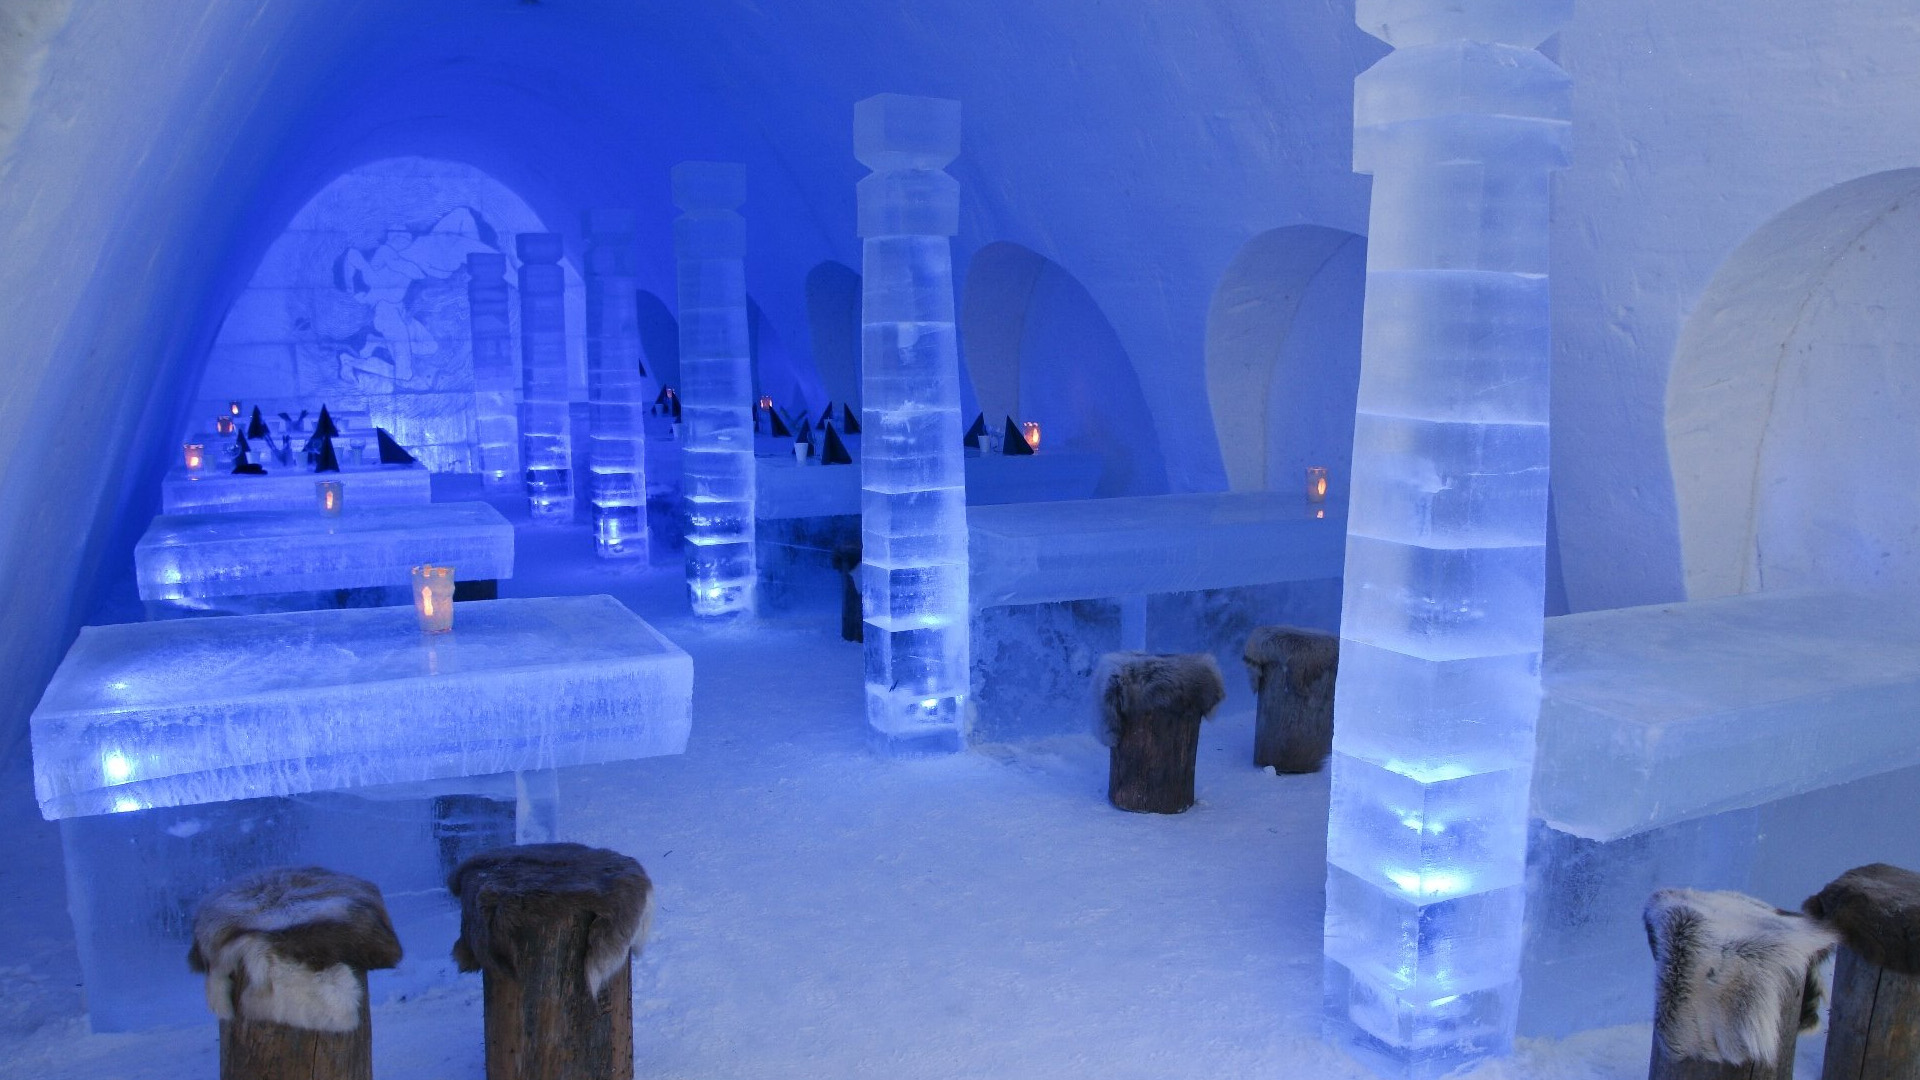 Snow Castle Restaurant in Finland